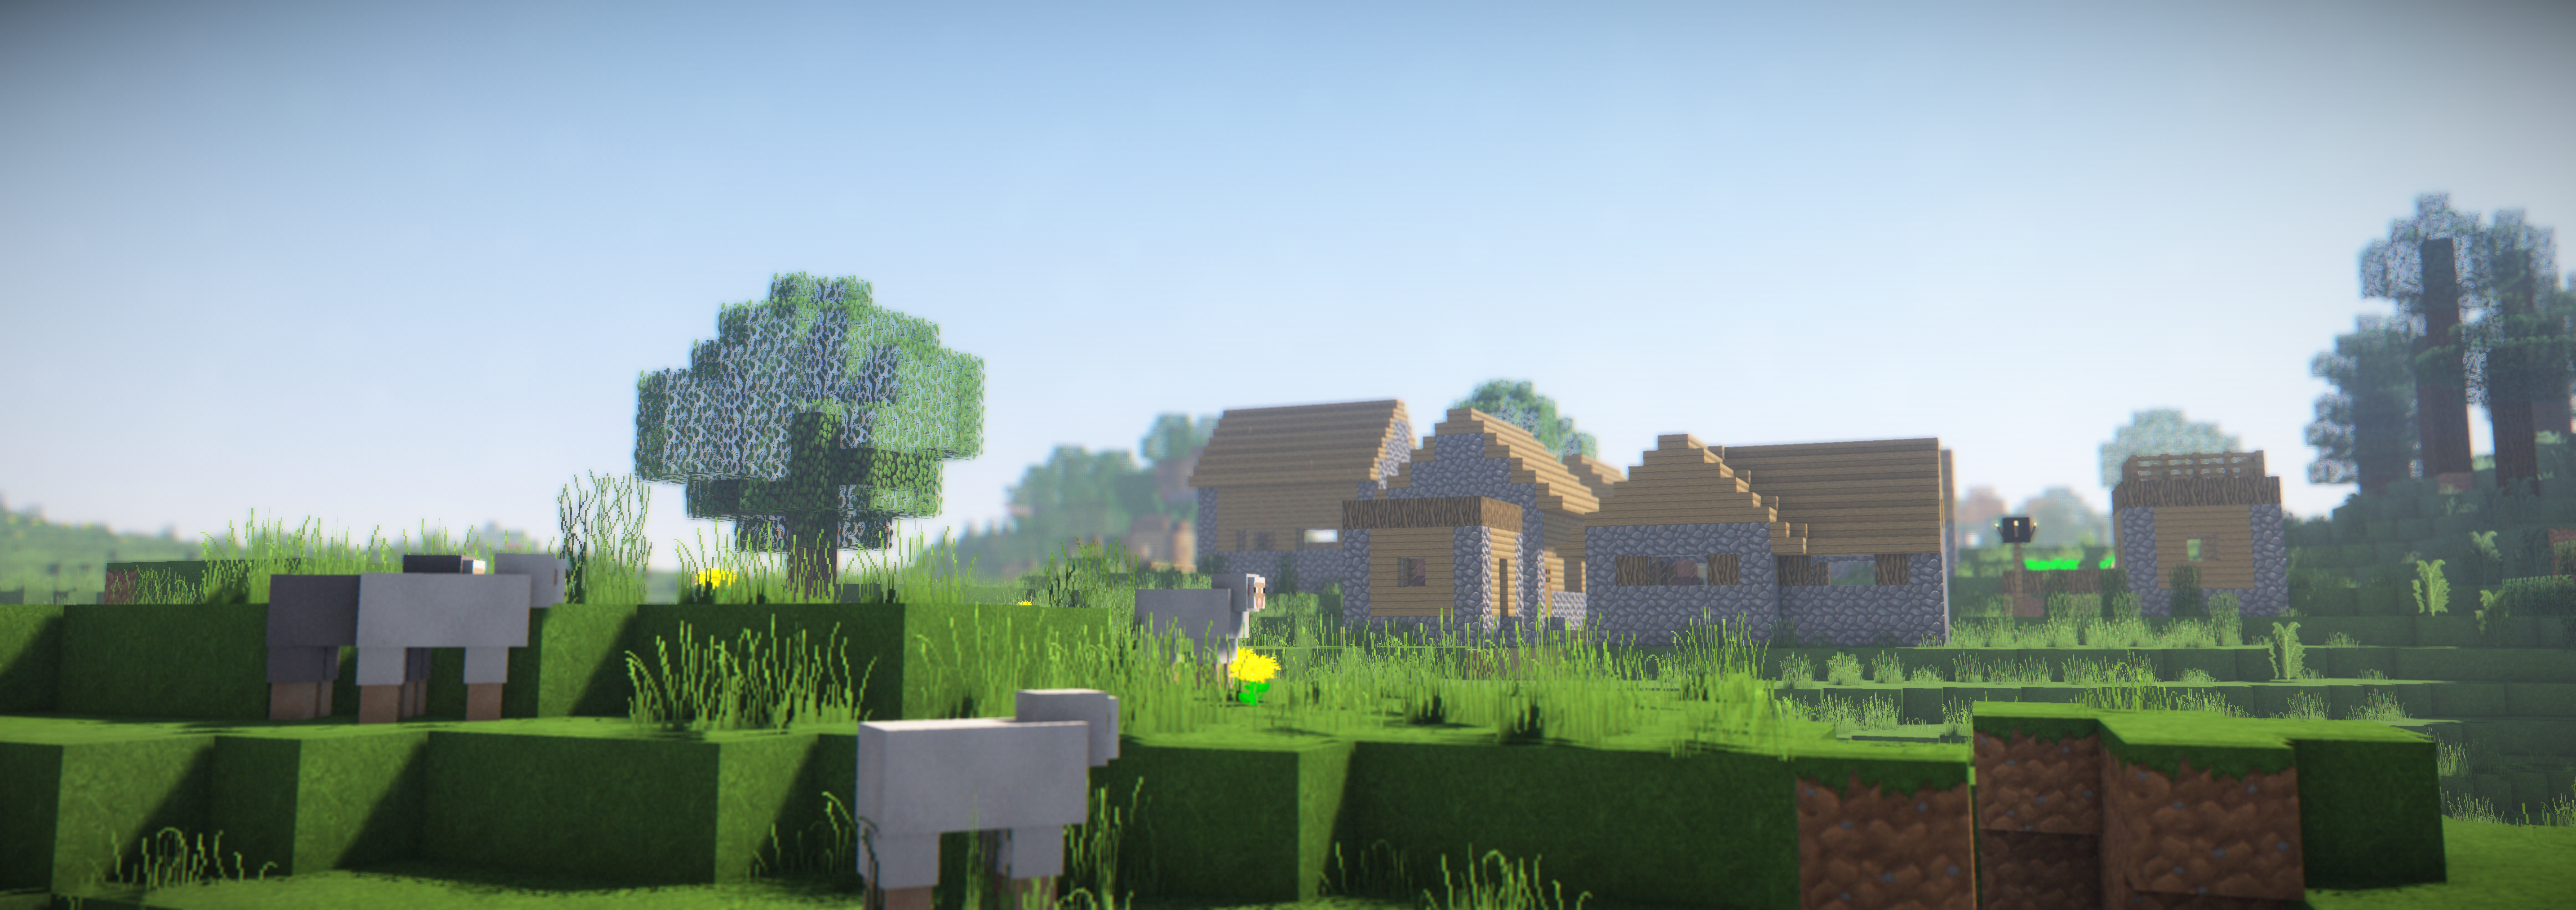 Minecraft Nature Video Games Villages Sheep Screen Shot 5733x2025